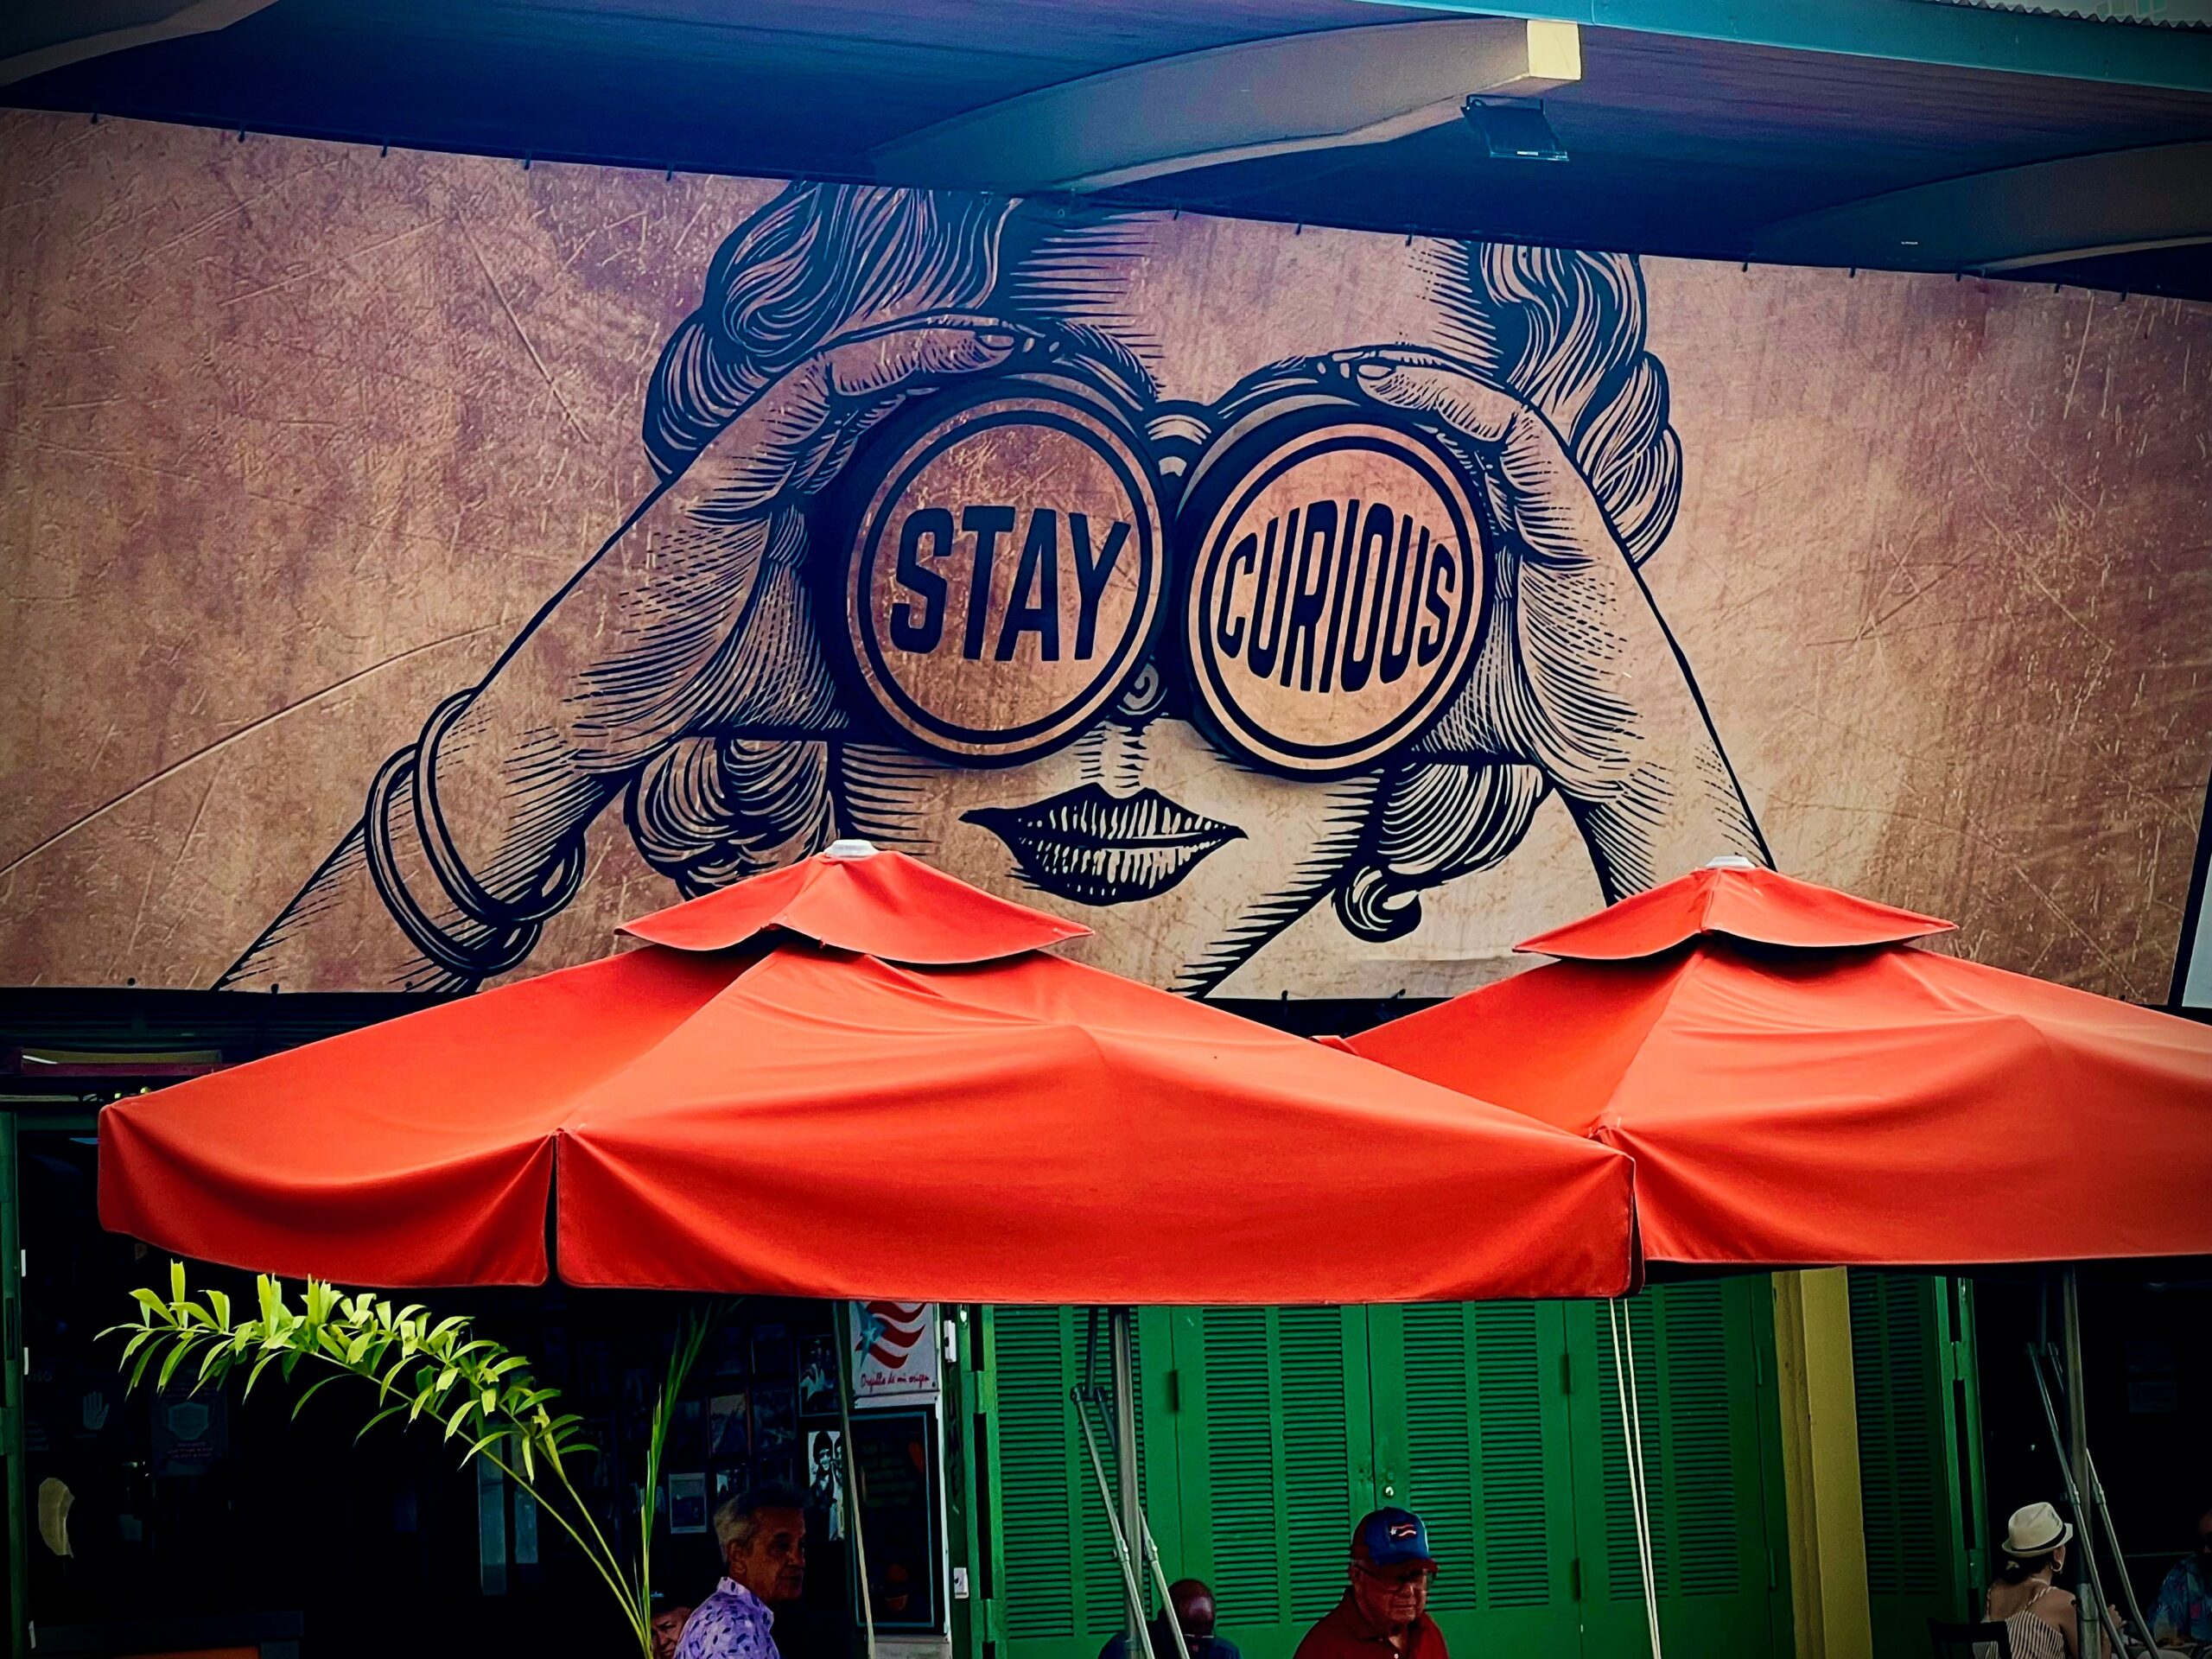 Stay Curious Wall Mural - La Placita, San Juan PR